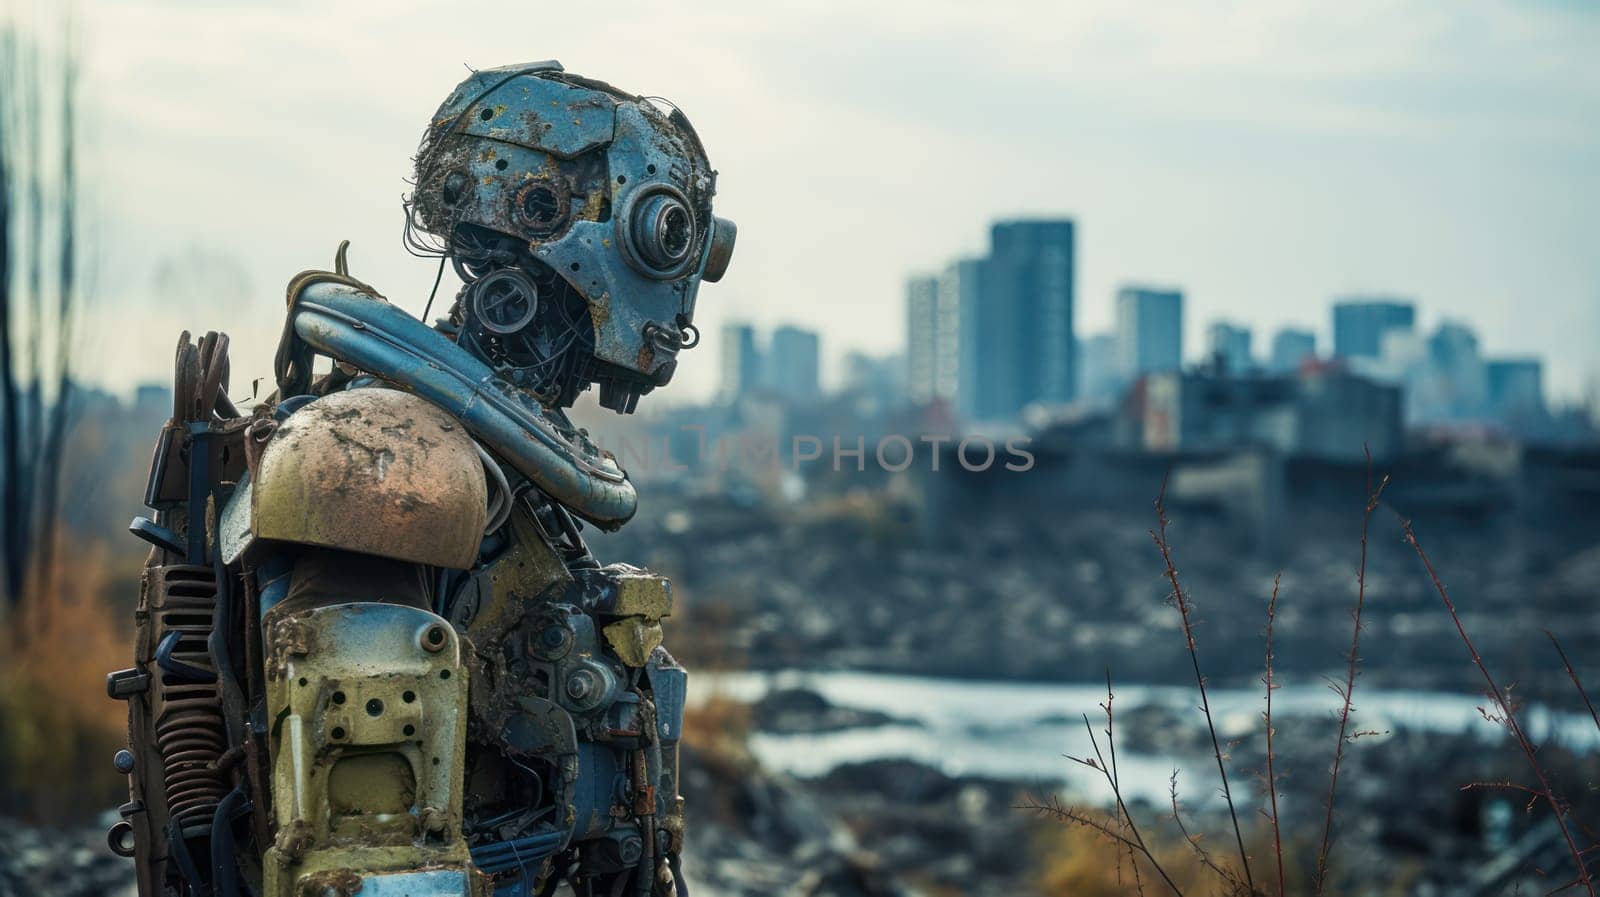 Destructions of World War. Artificial intelligence robot in a destroyed city. Fire, destruction and devastation. Old city